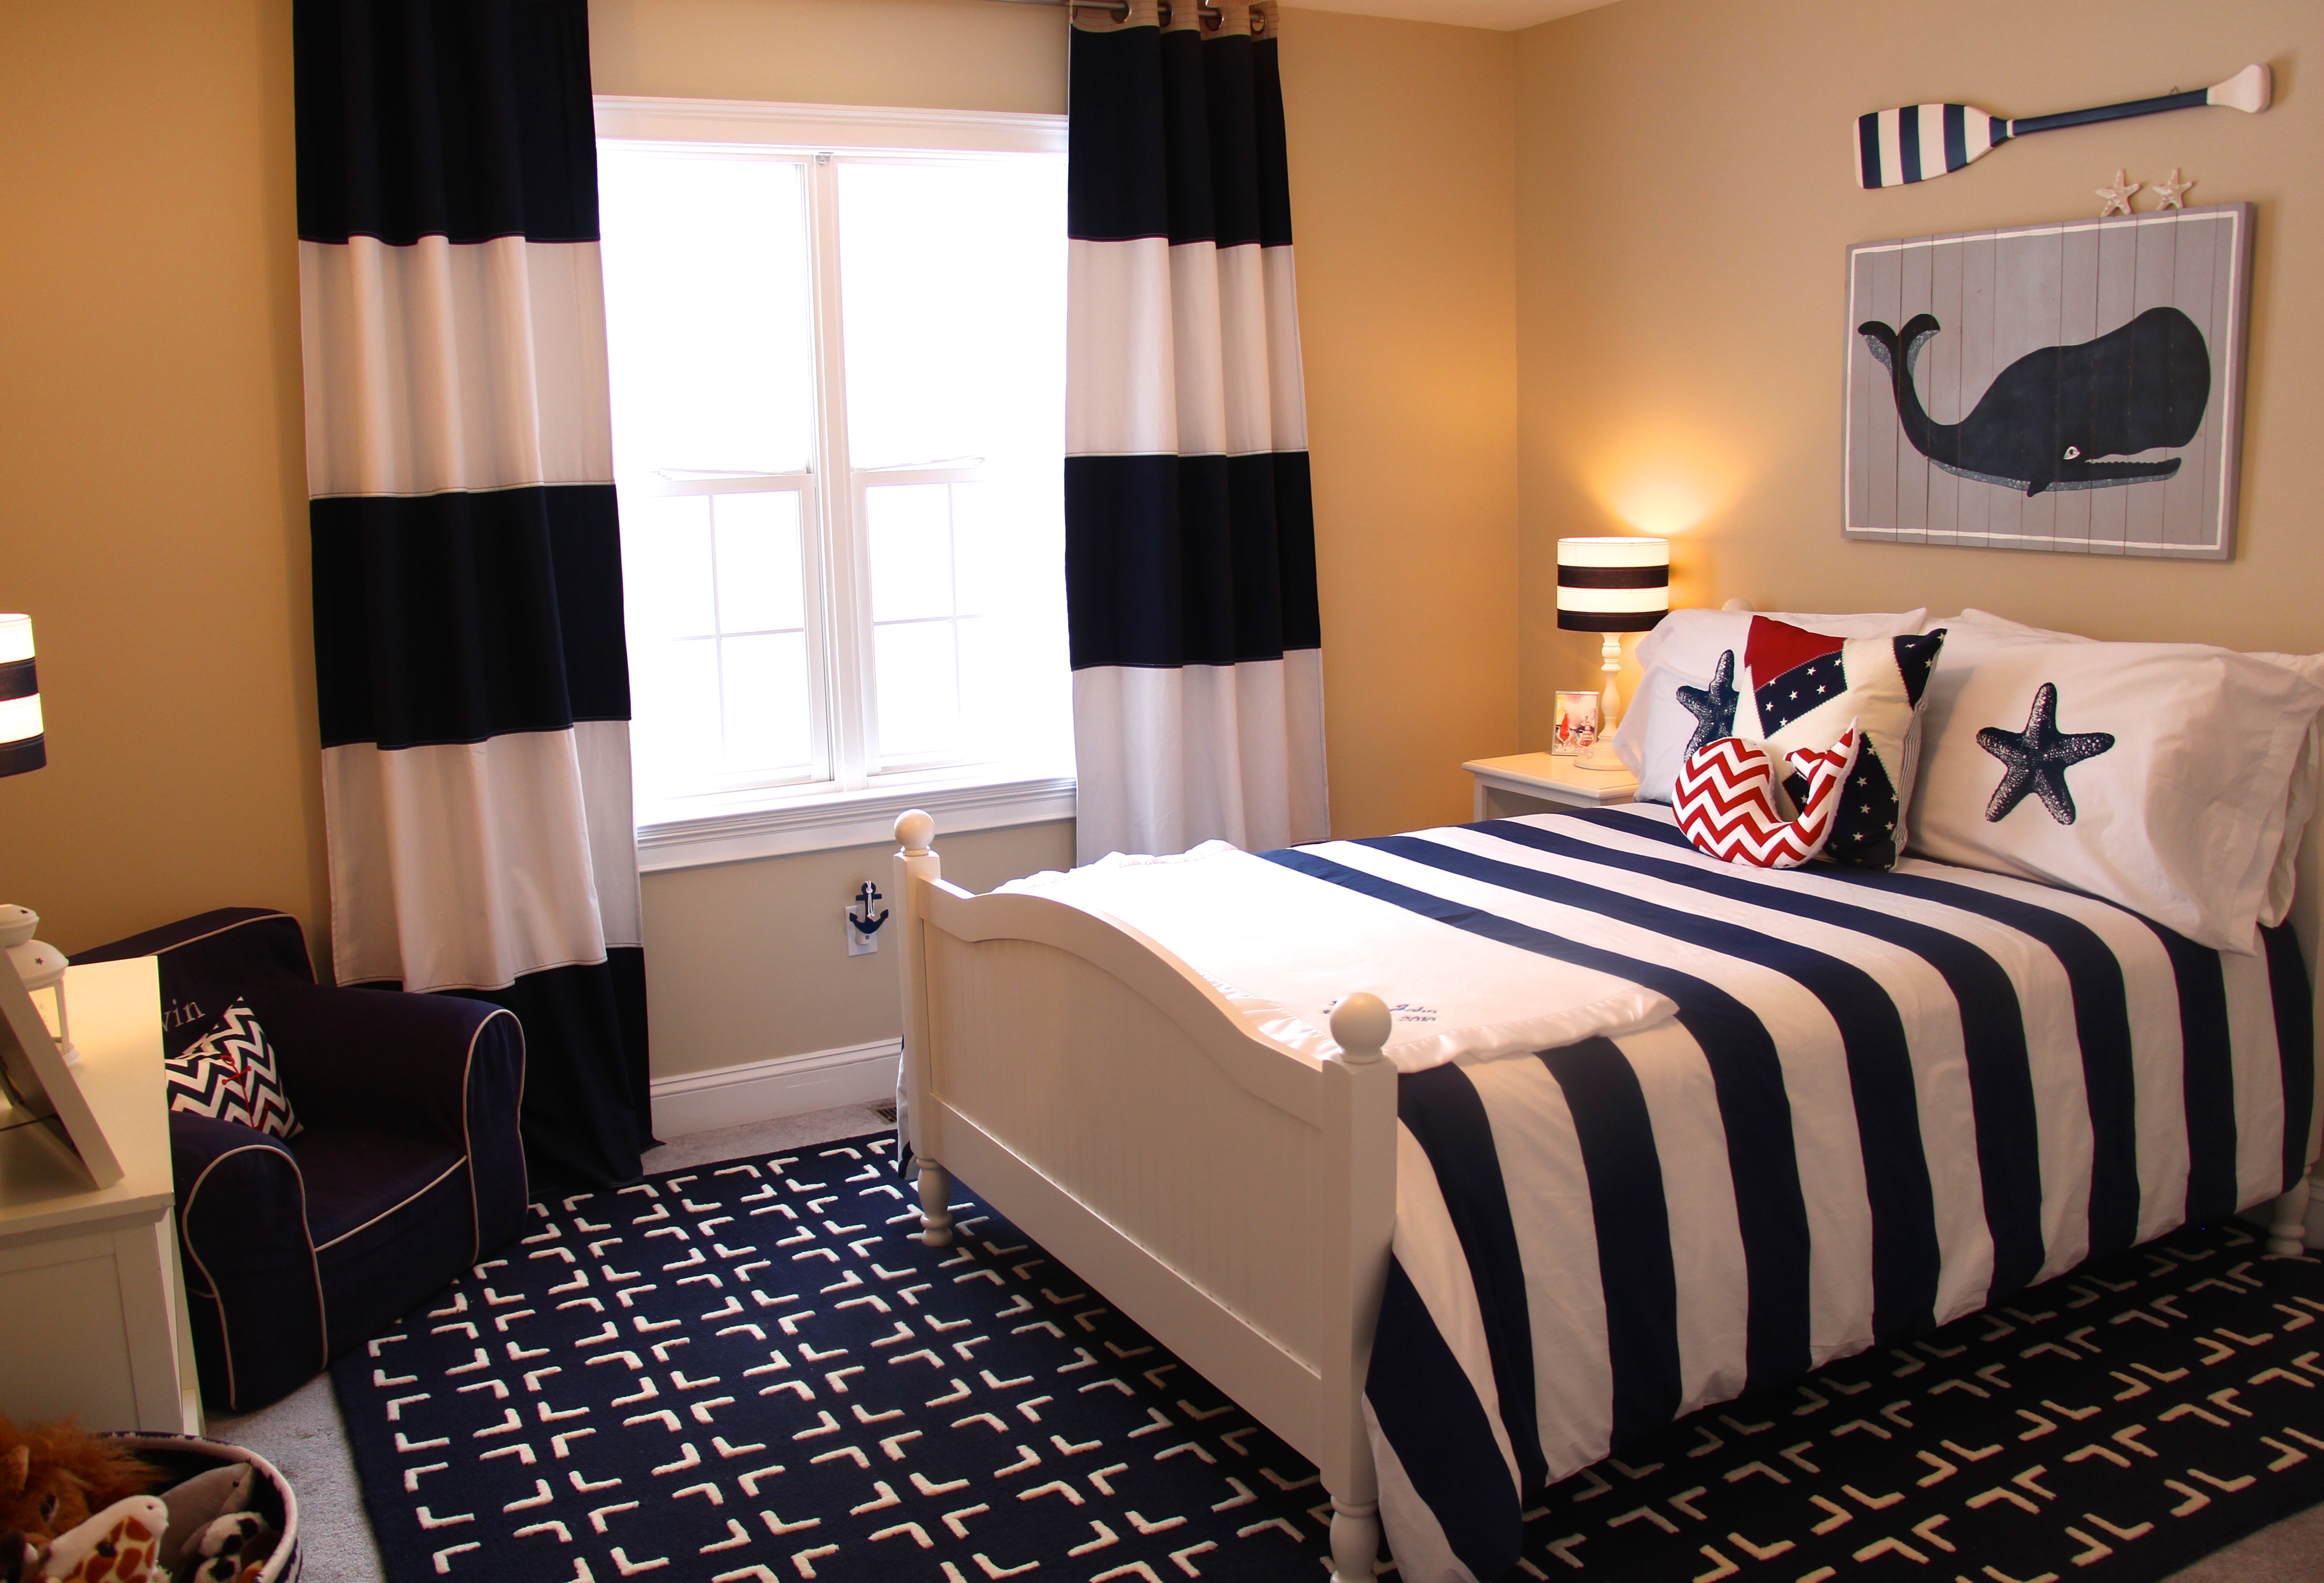 Minimalist Anchor Bedroom Ideas with Luxury Interior Design